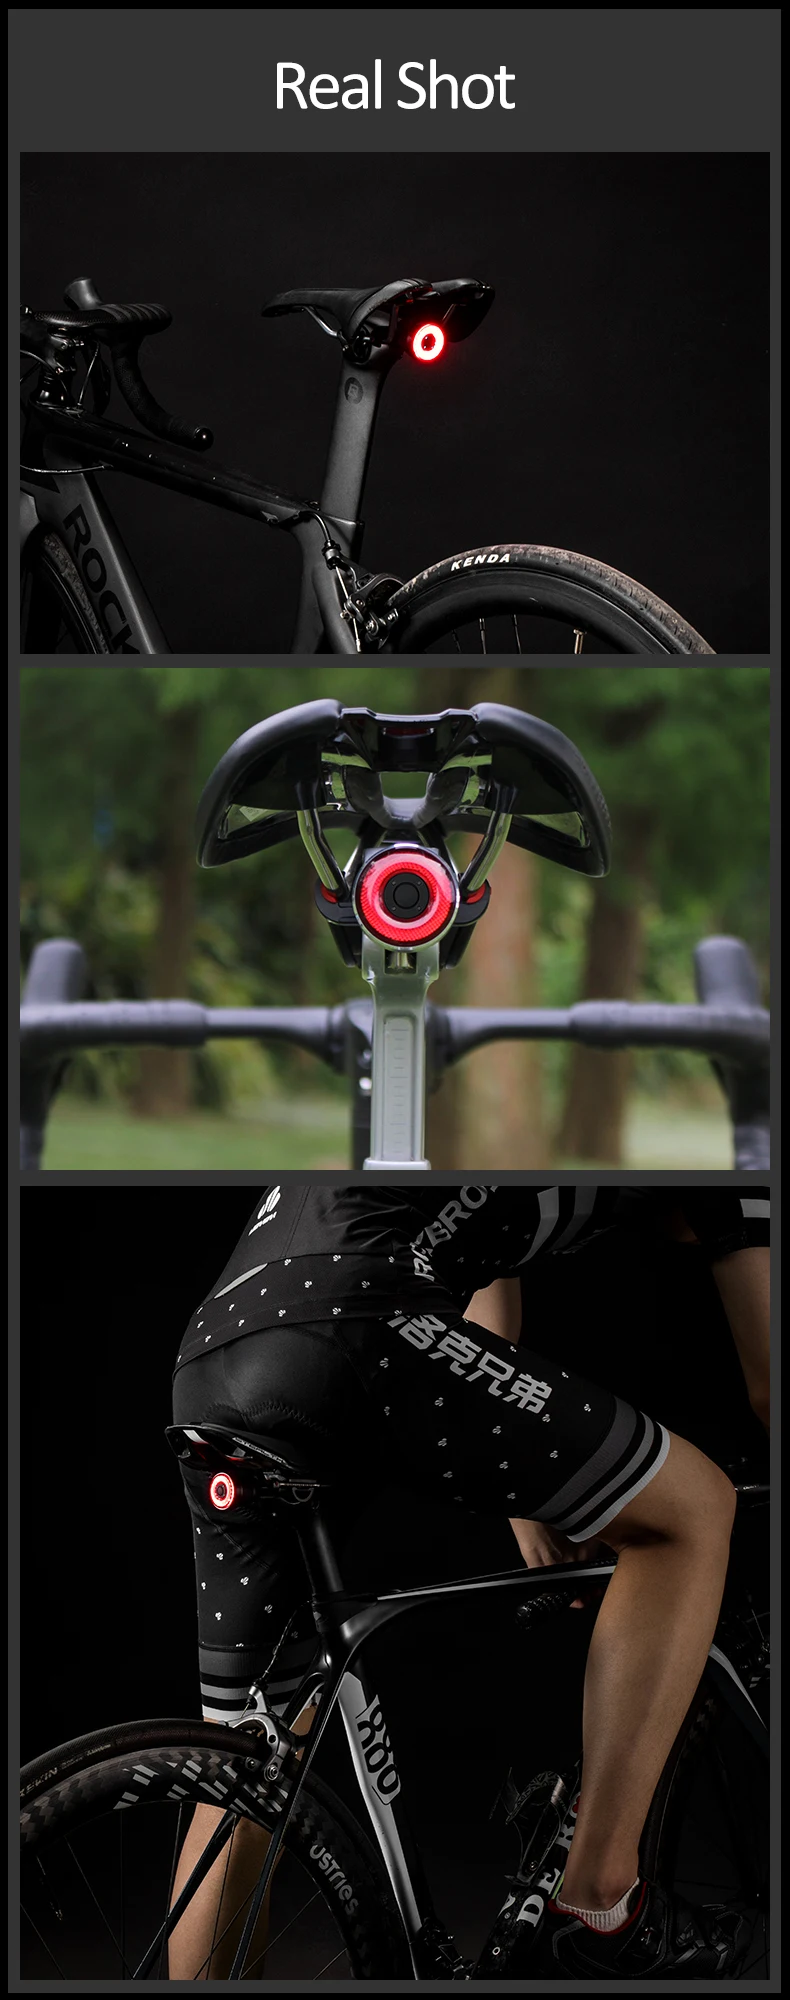 ROCKBROS Bicycle Smart Auto Brake Sensing Light IPx6 Waterproof LED Charging Cycling Taillight Bike Rear Light Accessories Q5